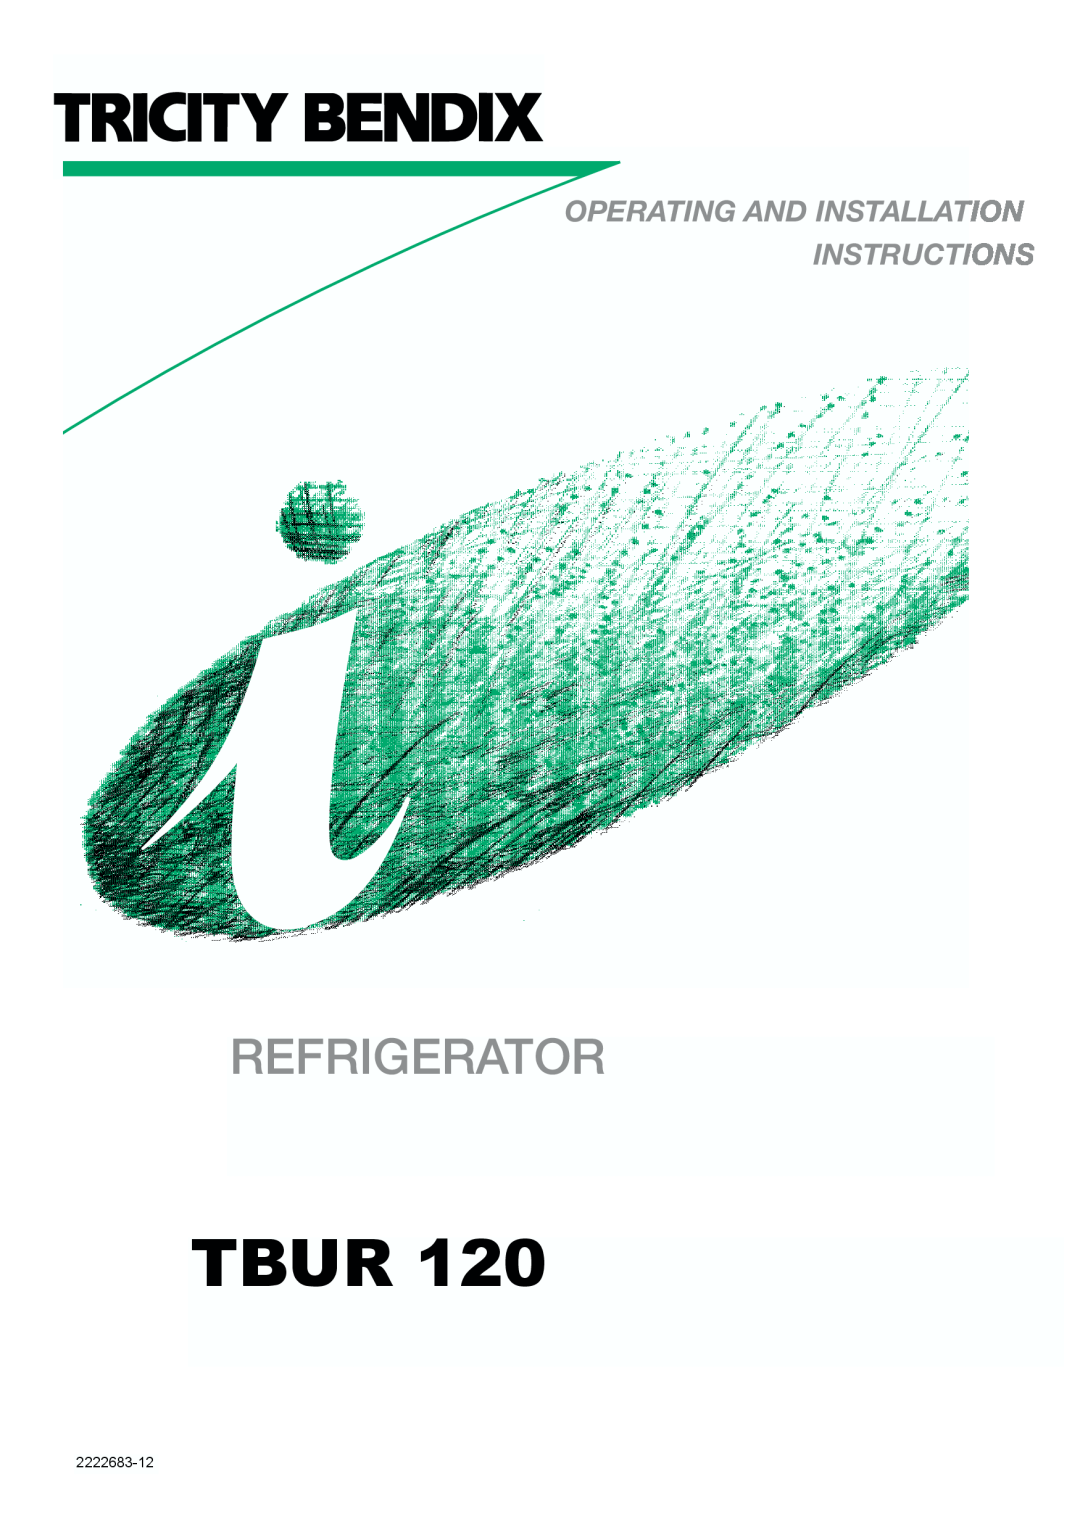 Tricity Bendix TBUR 120 installation instructions Tbur, Refrigerator, Operating And Installation Instructions, 2222683-12 